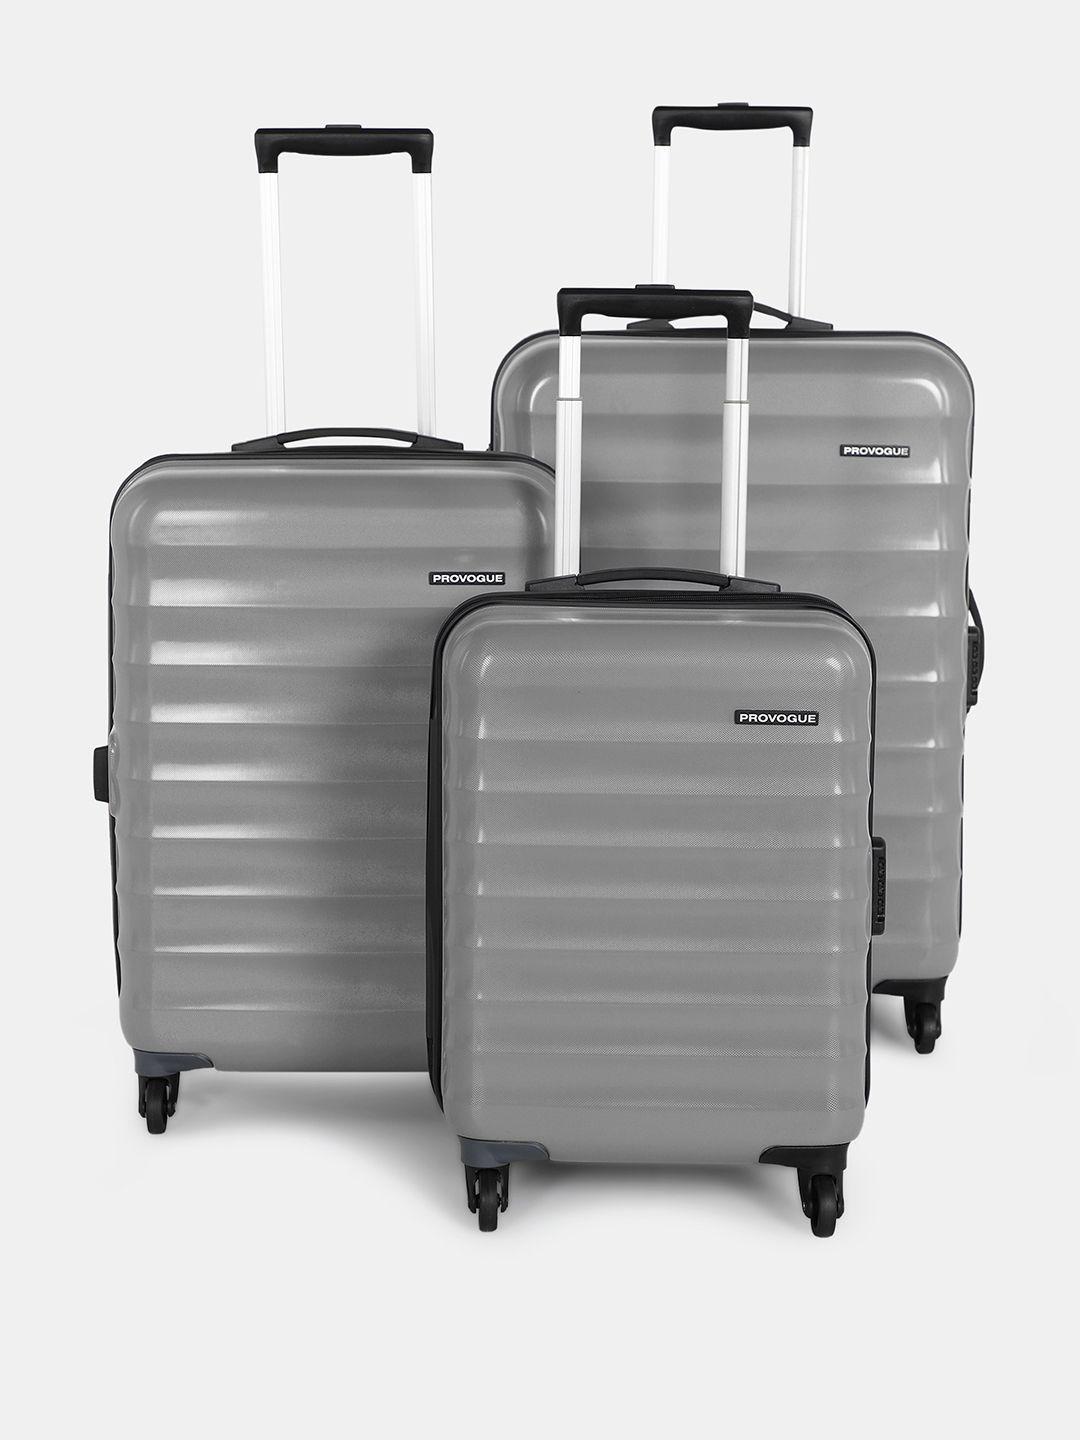 provogue verge hard body set of 3 small, medium & large size trolley suitcases